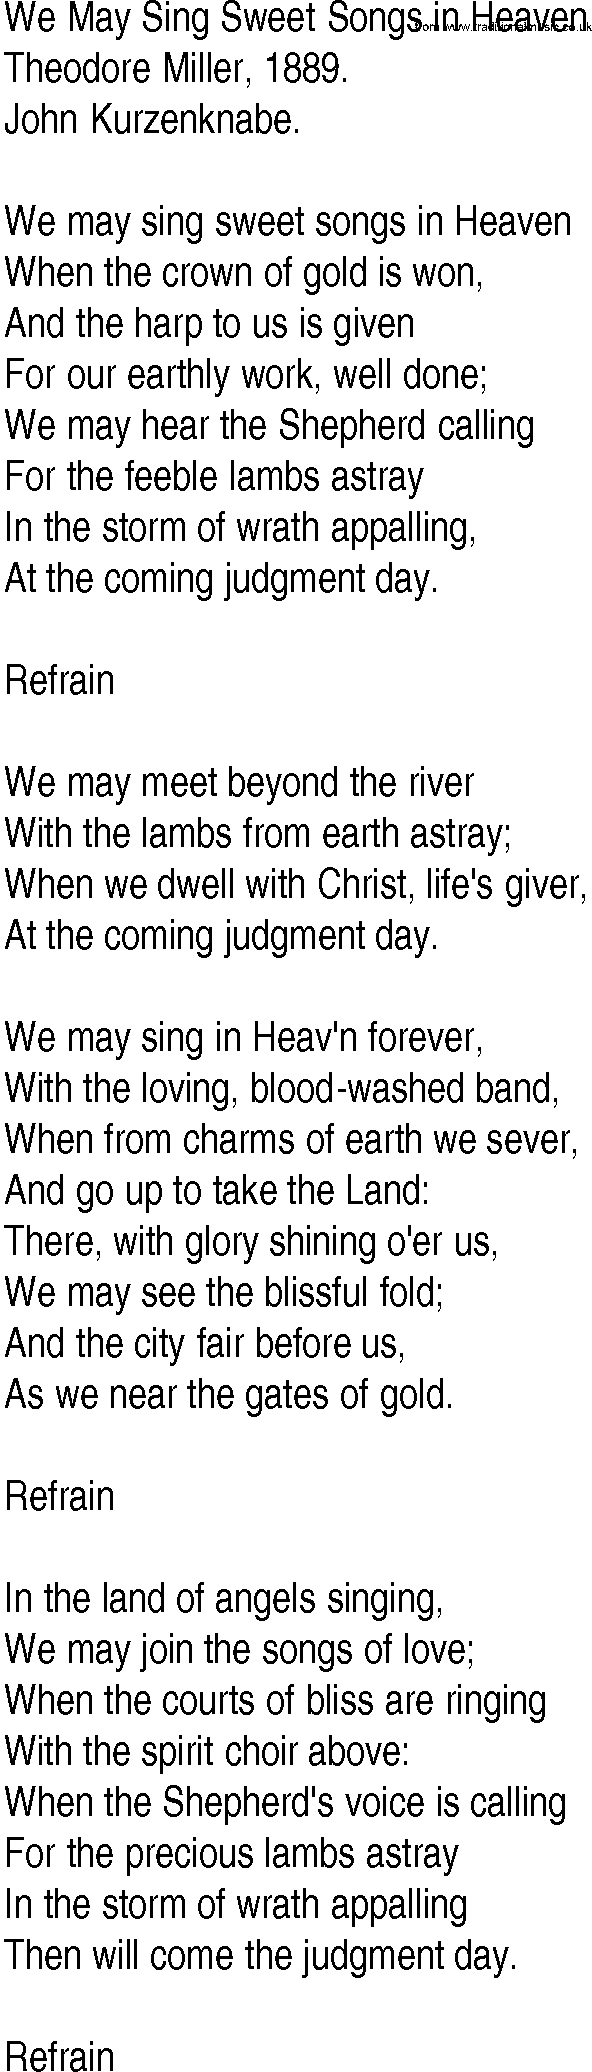 Hymn and Gospel Song: We May Sing Sweet Songs in Heaven by Theodore Miller lyrics